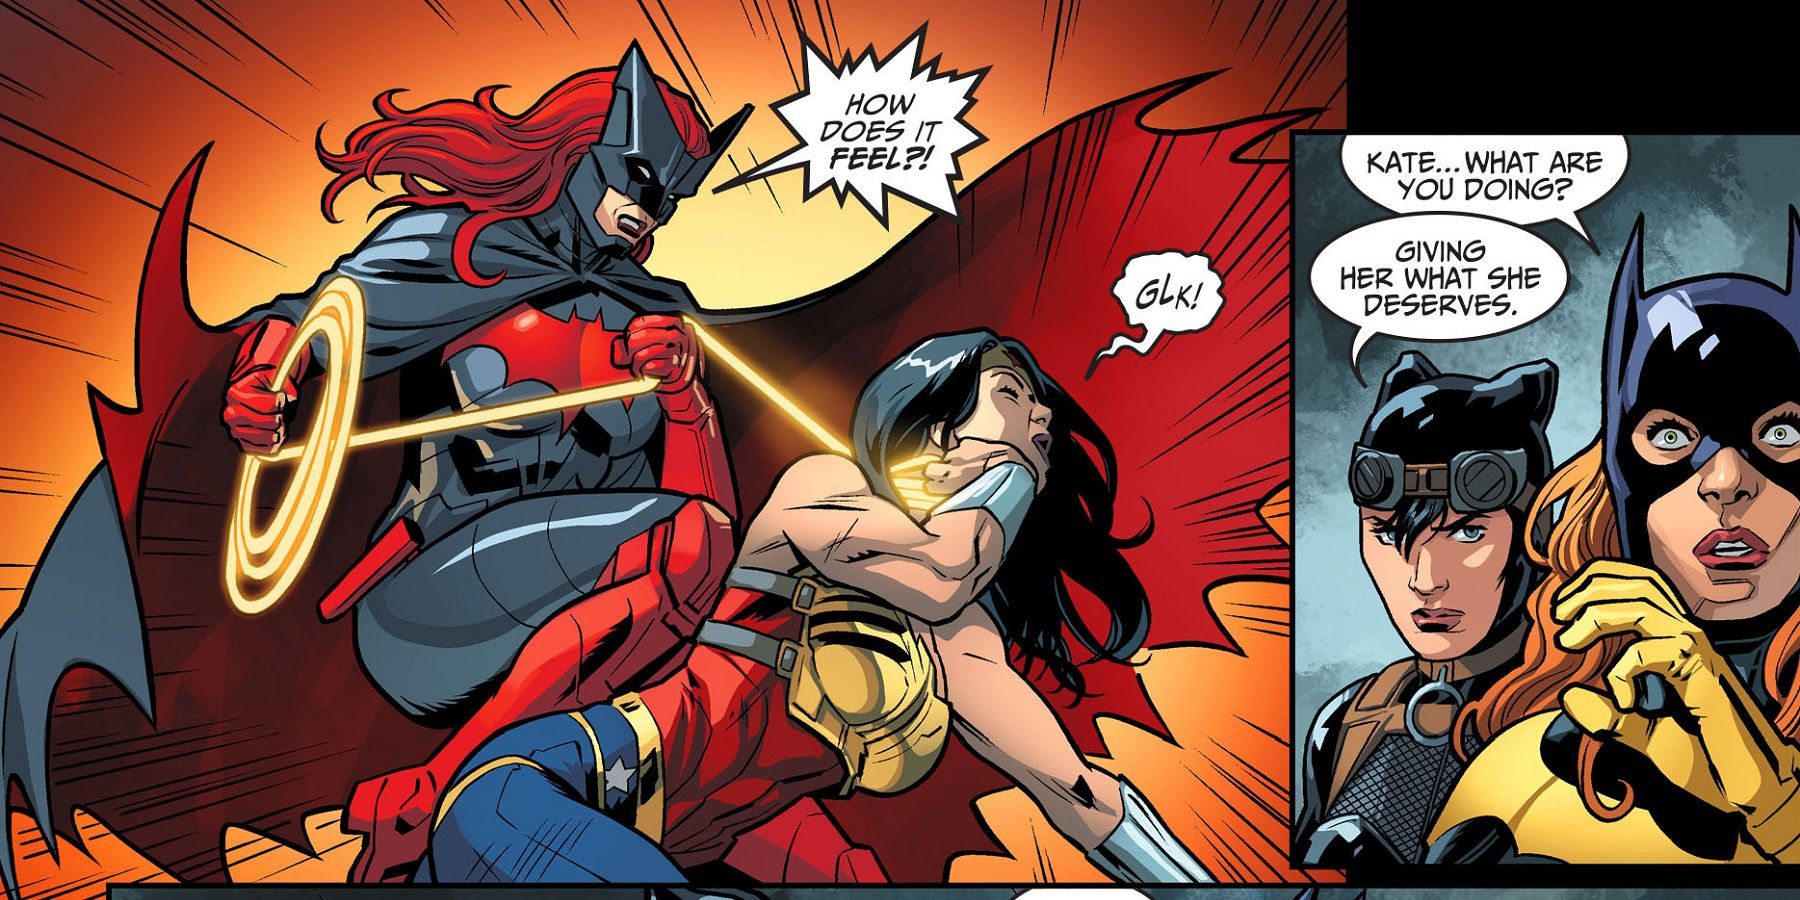 Batwoman strangles Wonder Woman during Injustice